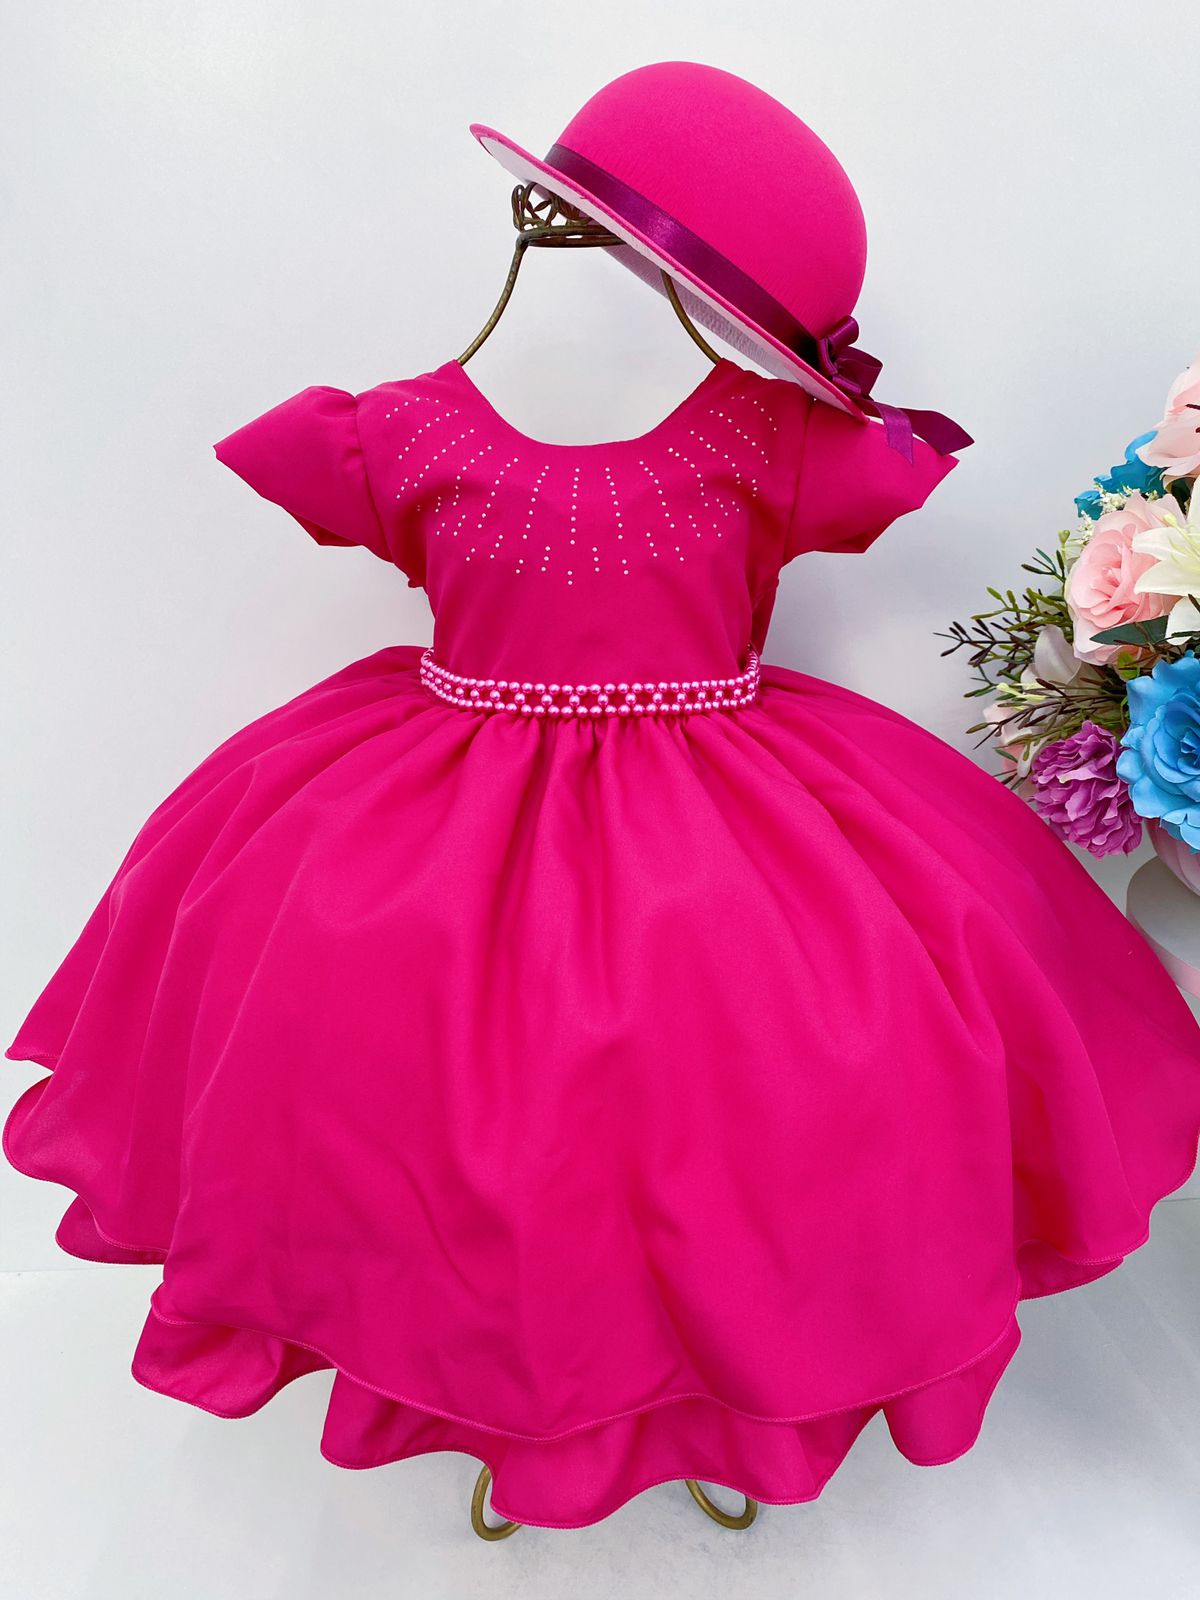 Vestido Infantil Pink Cinto Pérolas C/ Chapéu